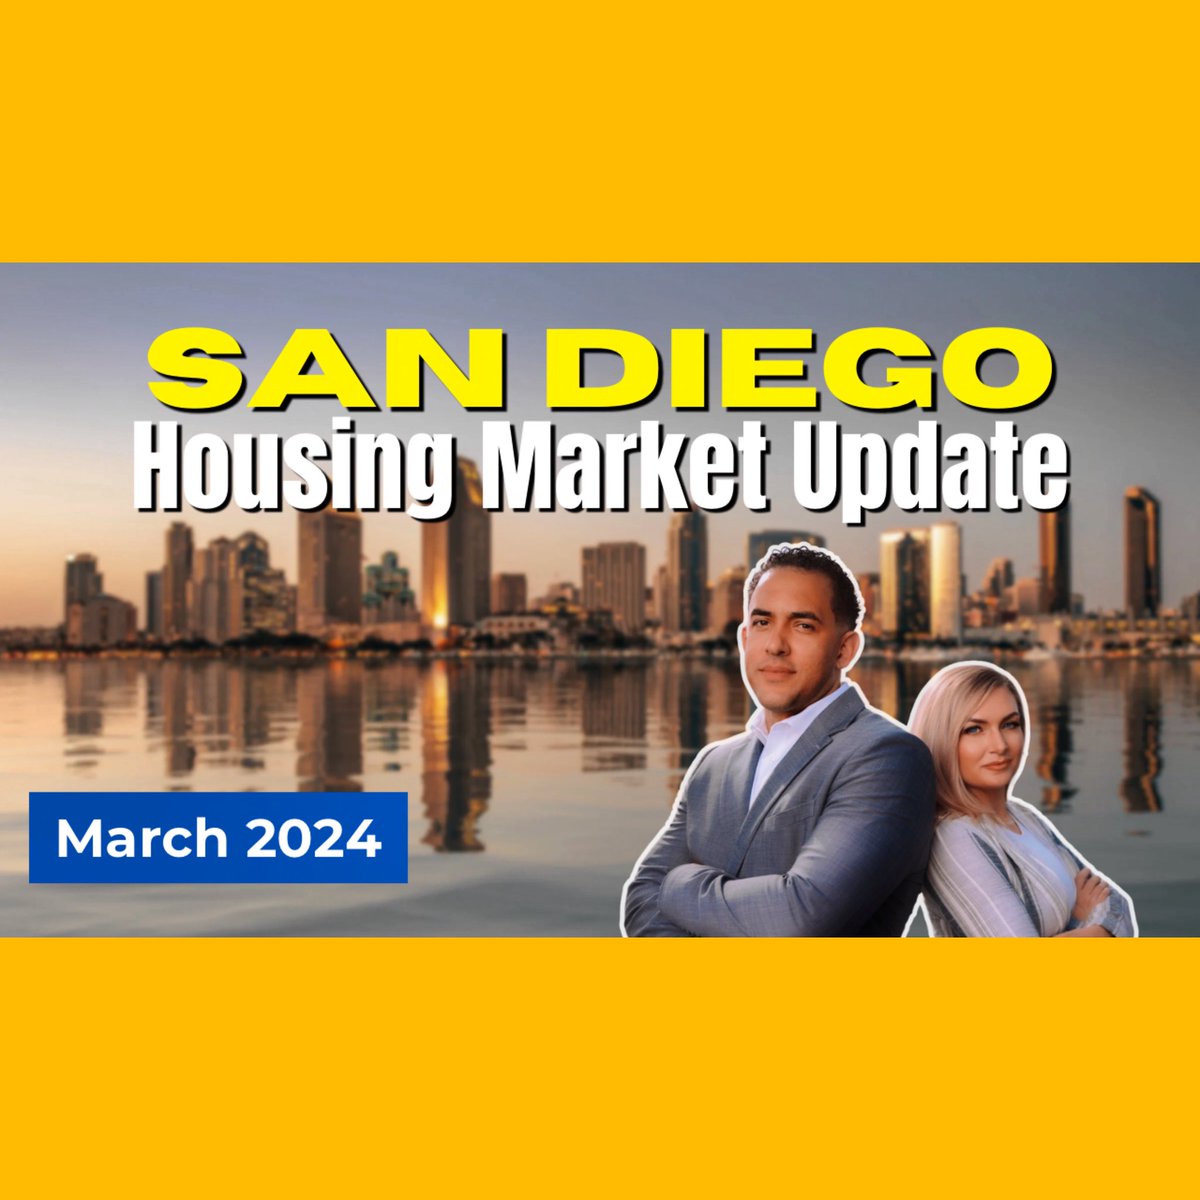 San Diego Housing Market UPDATE (March 2024)
youtu.be/zGfNIN27Myo

#sandiego #realestate #Marketupdate #iancollinsrealtor